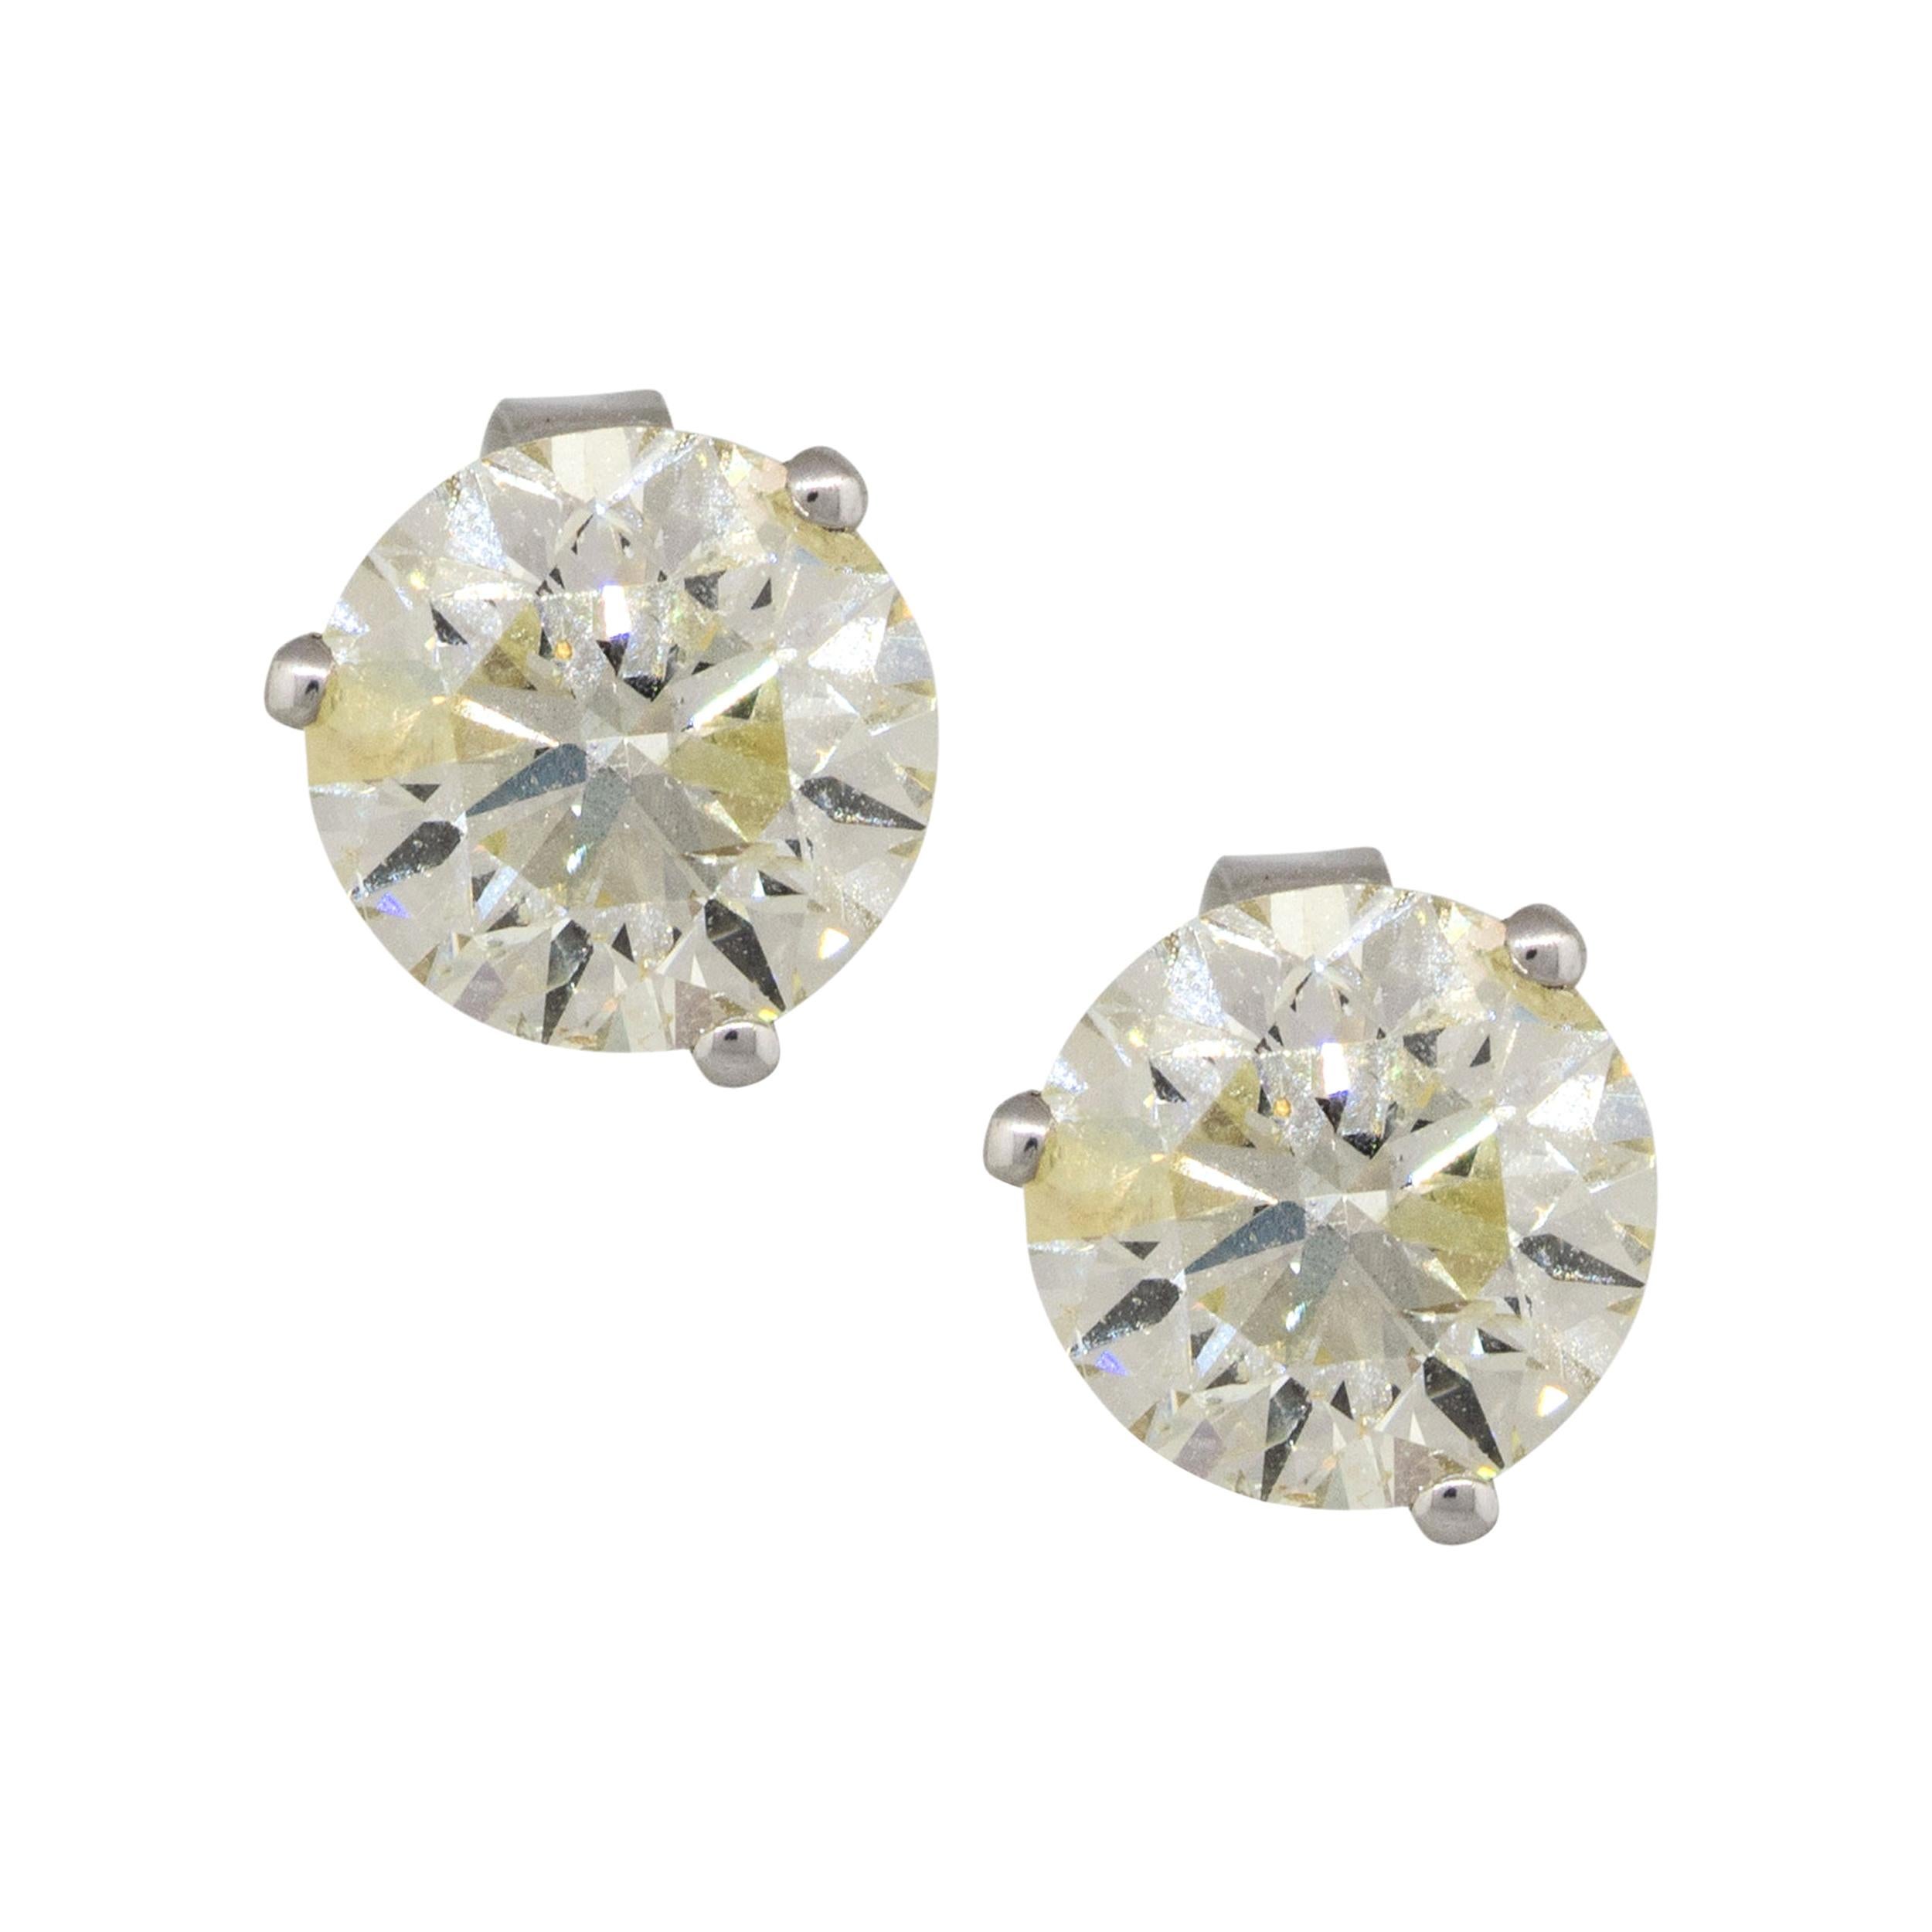 3.06 Carats Round Diamond Stud Earrings 14 Karat